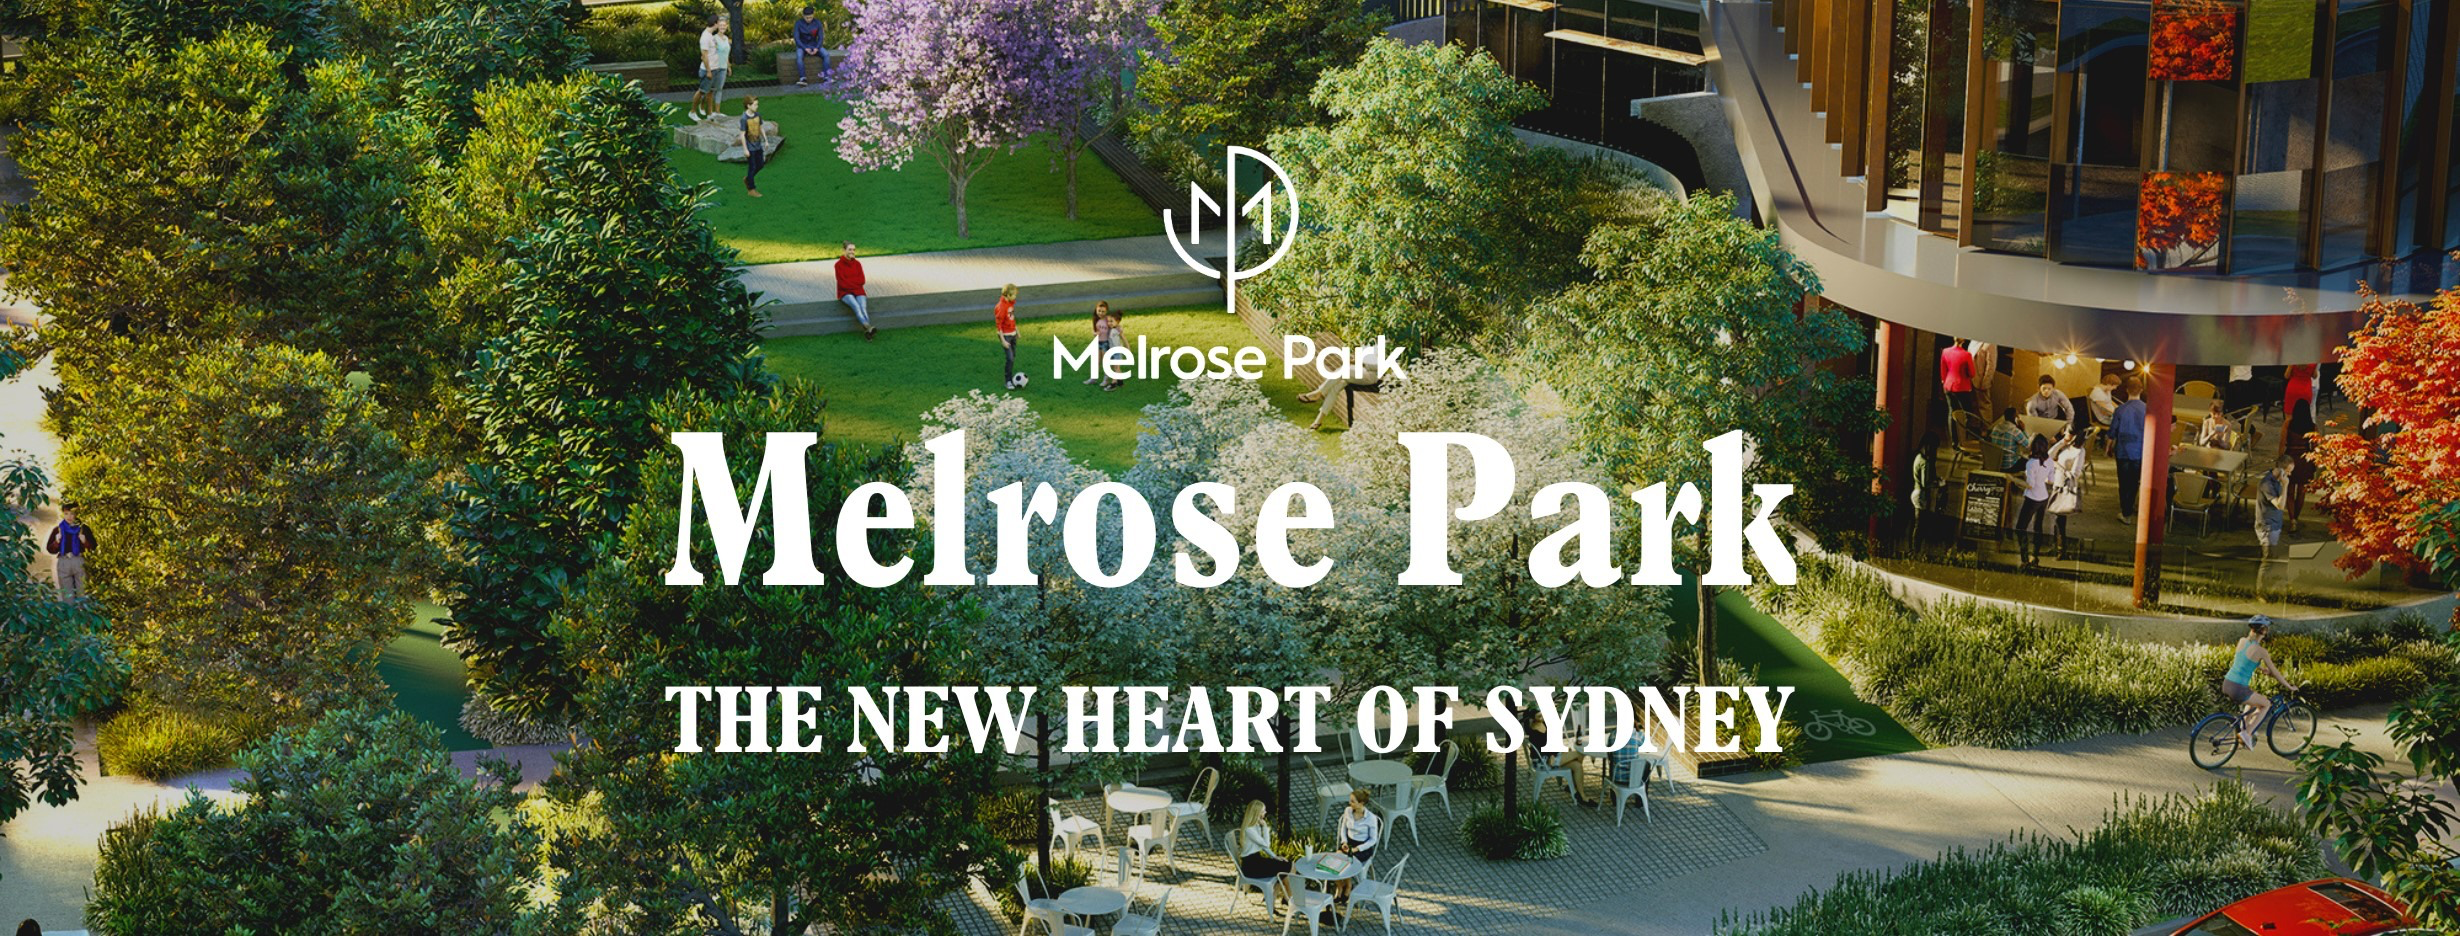 Melrose Park Open Day